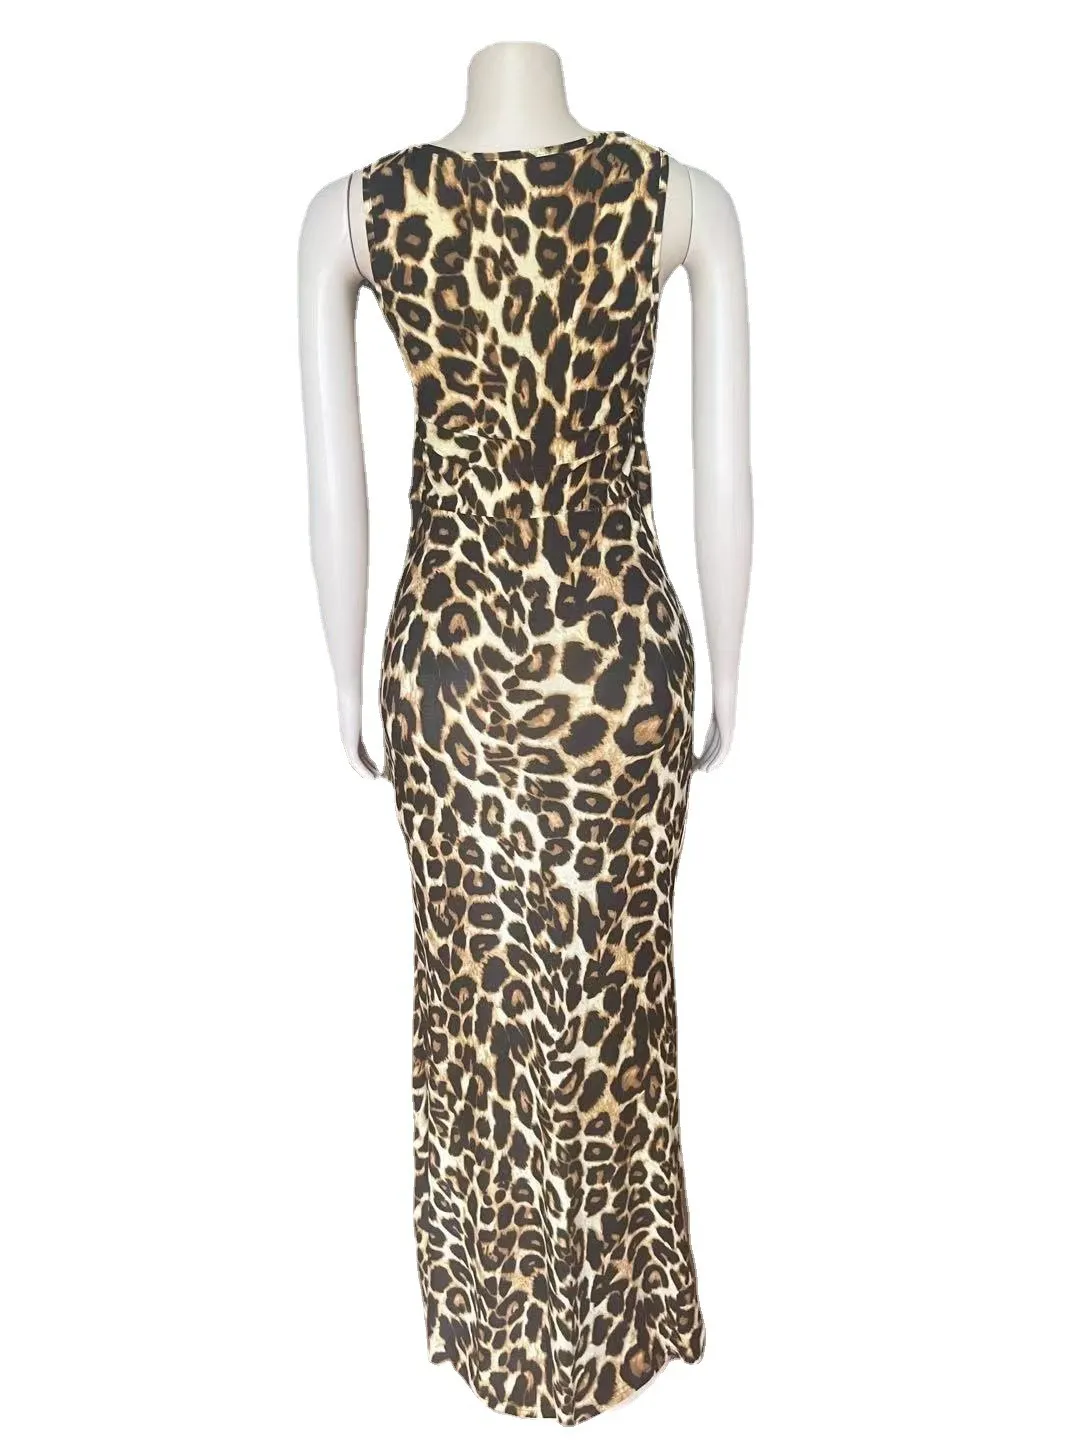 Mulheres Vestidos Verão Vestido de Mujer Sweet Girl Leopard Impresso Elegant Hollow Out Party Club Robe Sexy Outfits 210525